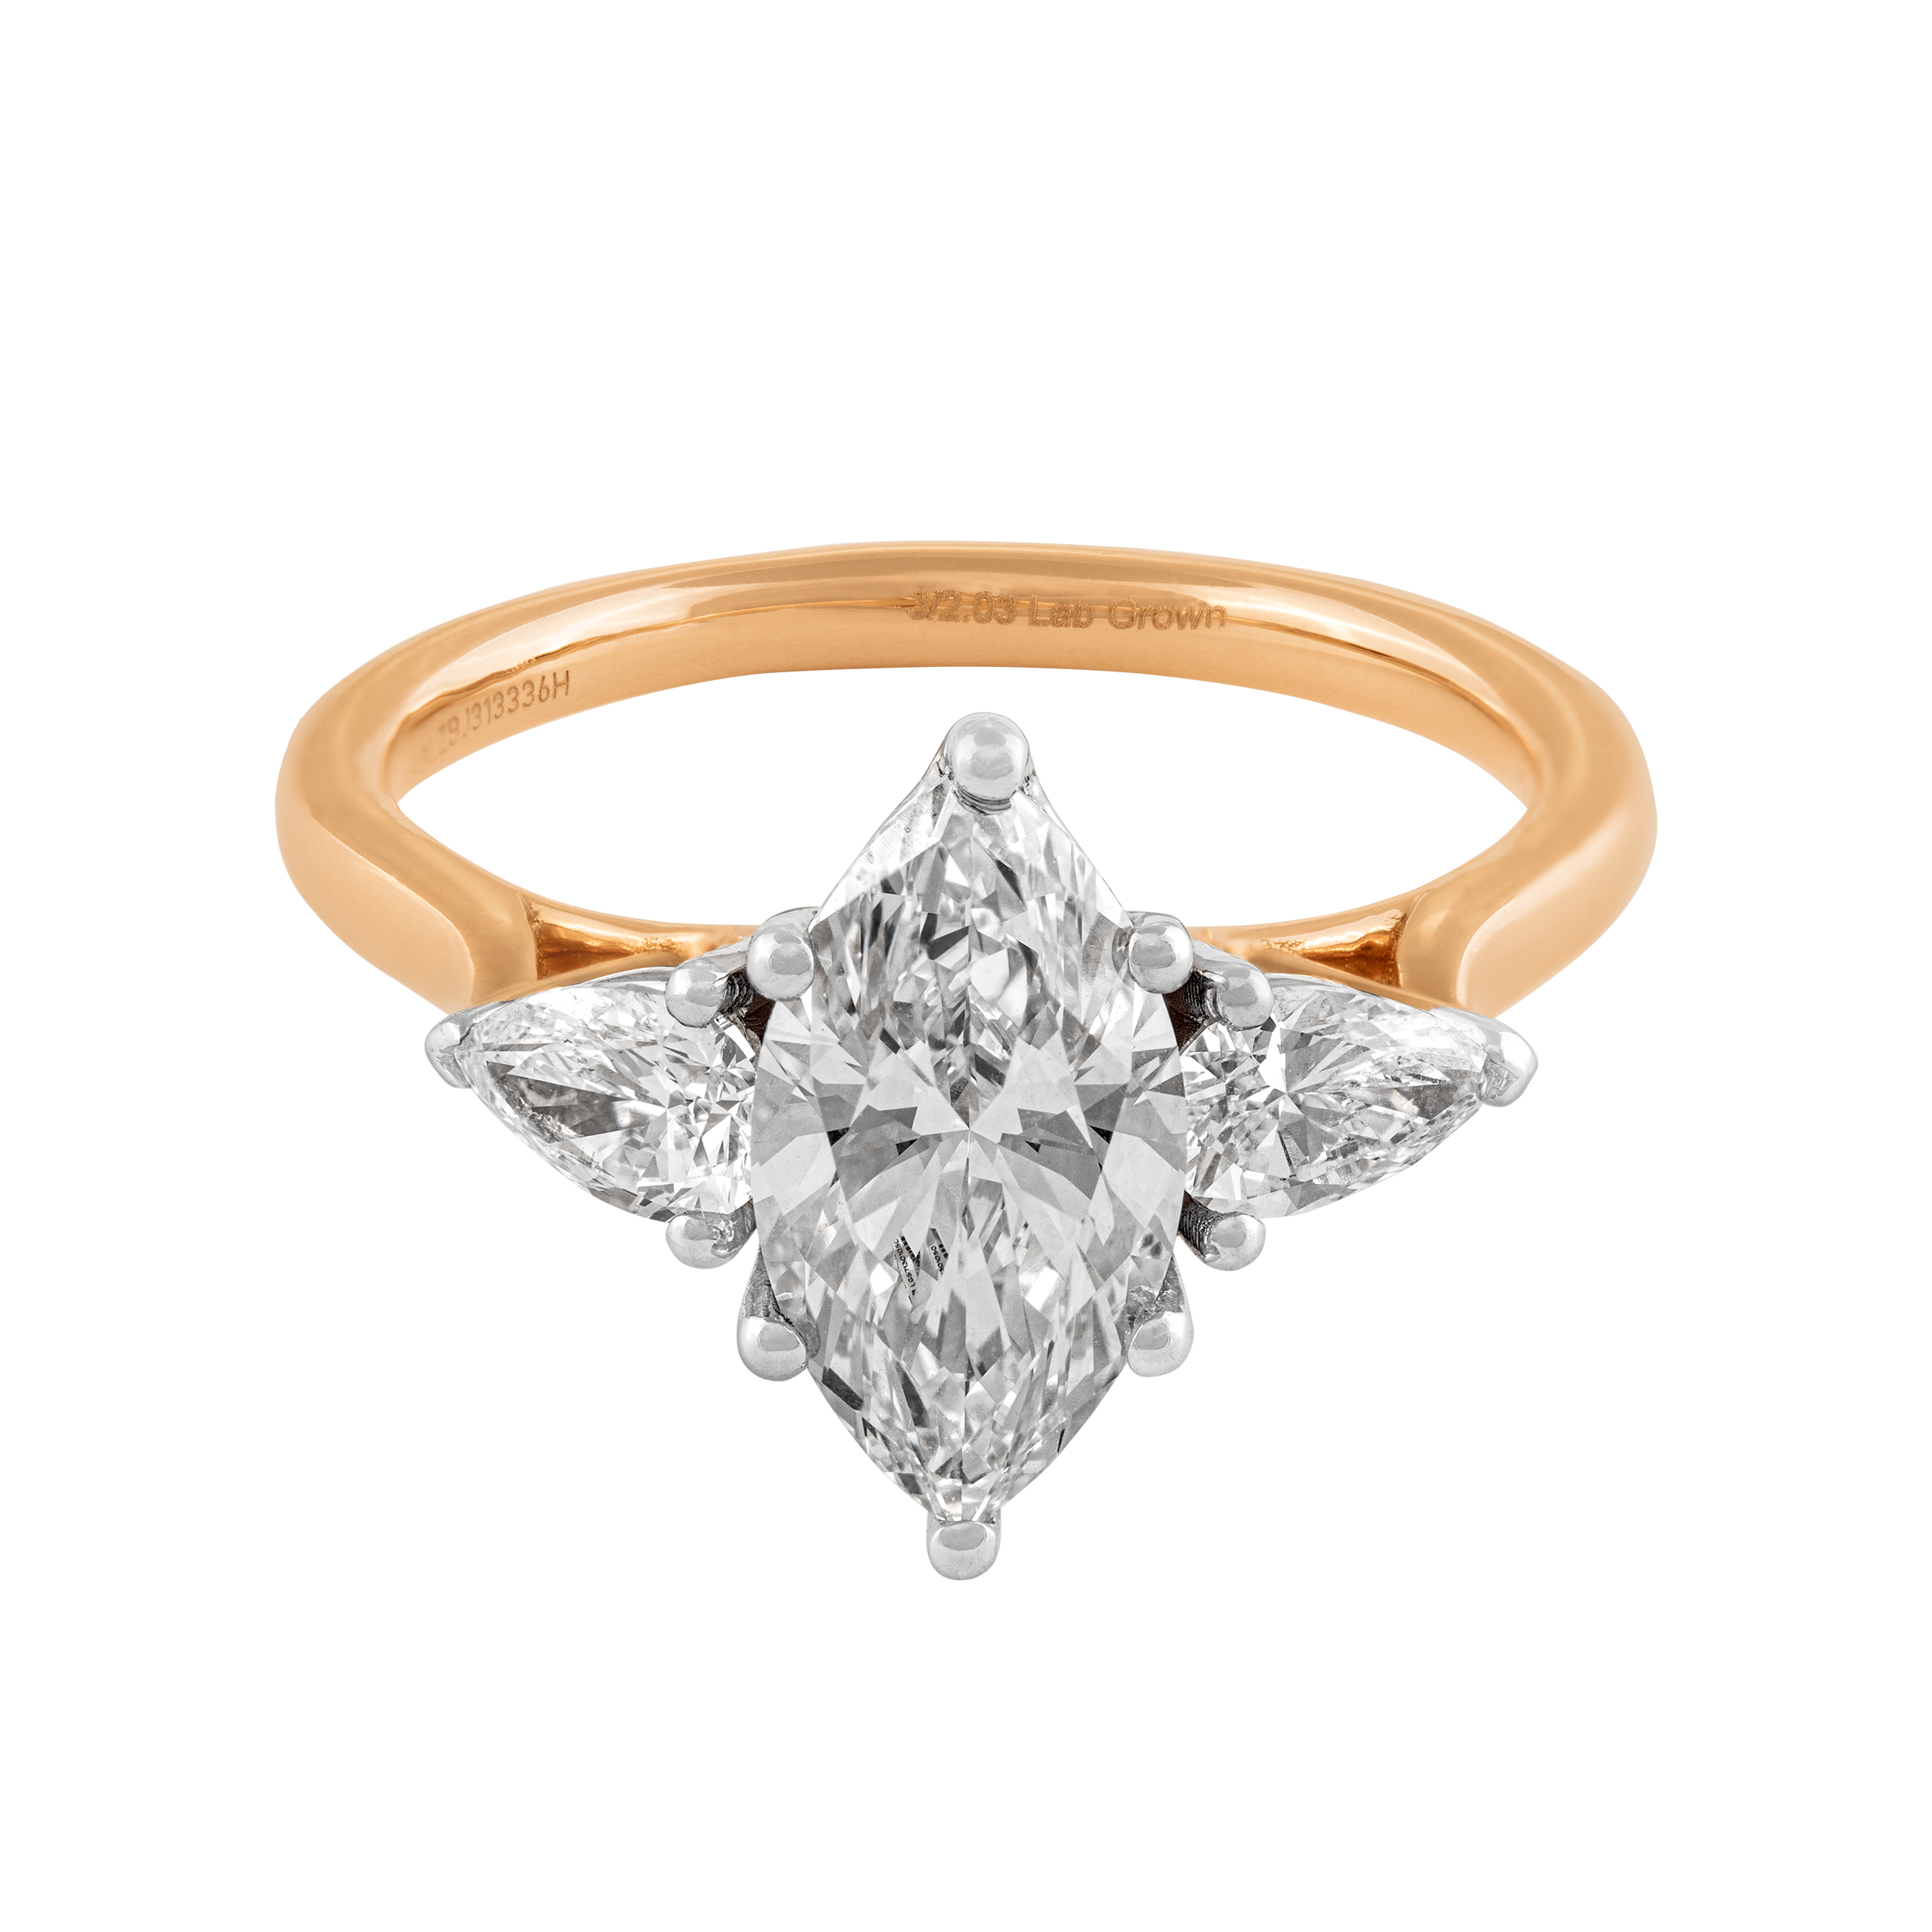 Graceful Lab Grown Diamonds in a Classy Elegance Ring  | SKU: 0019052649